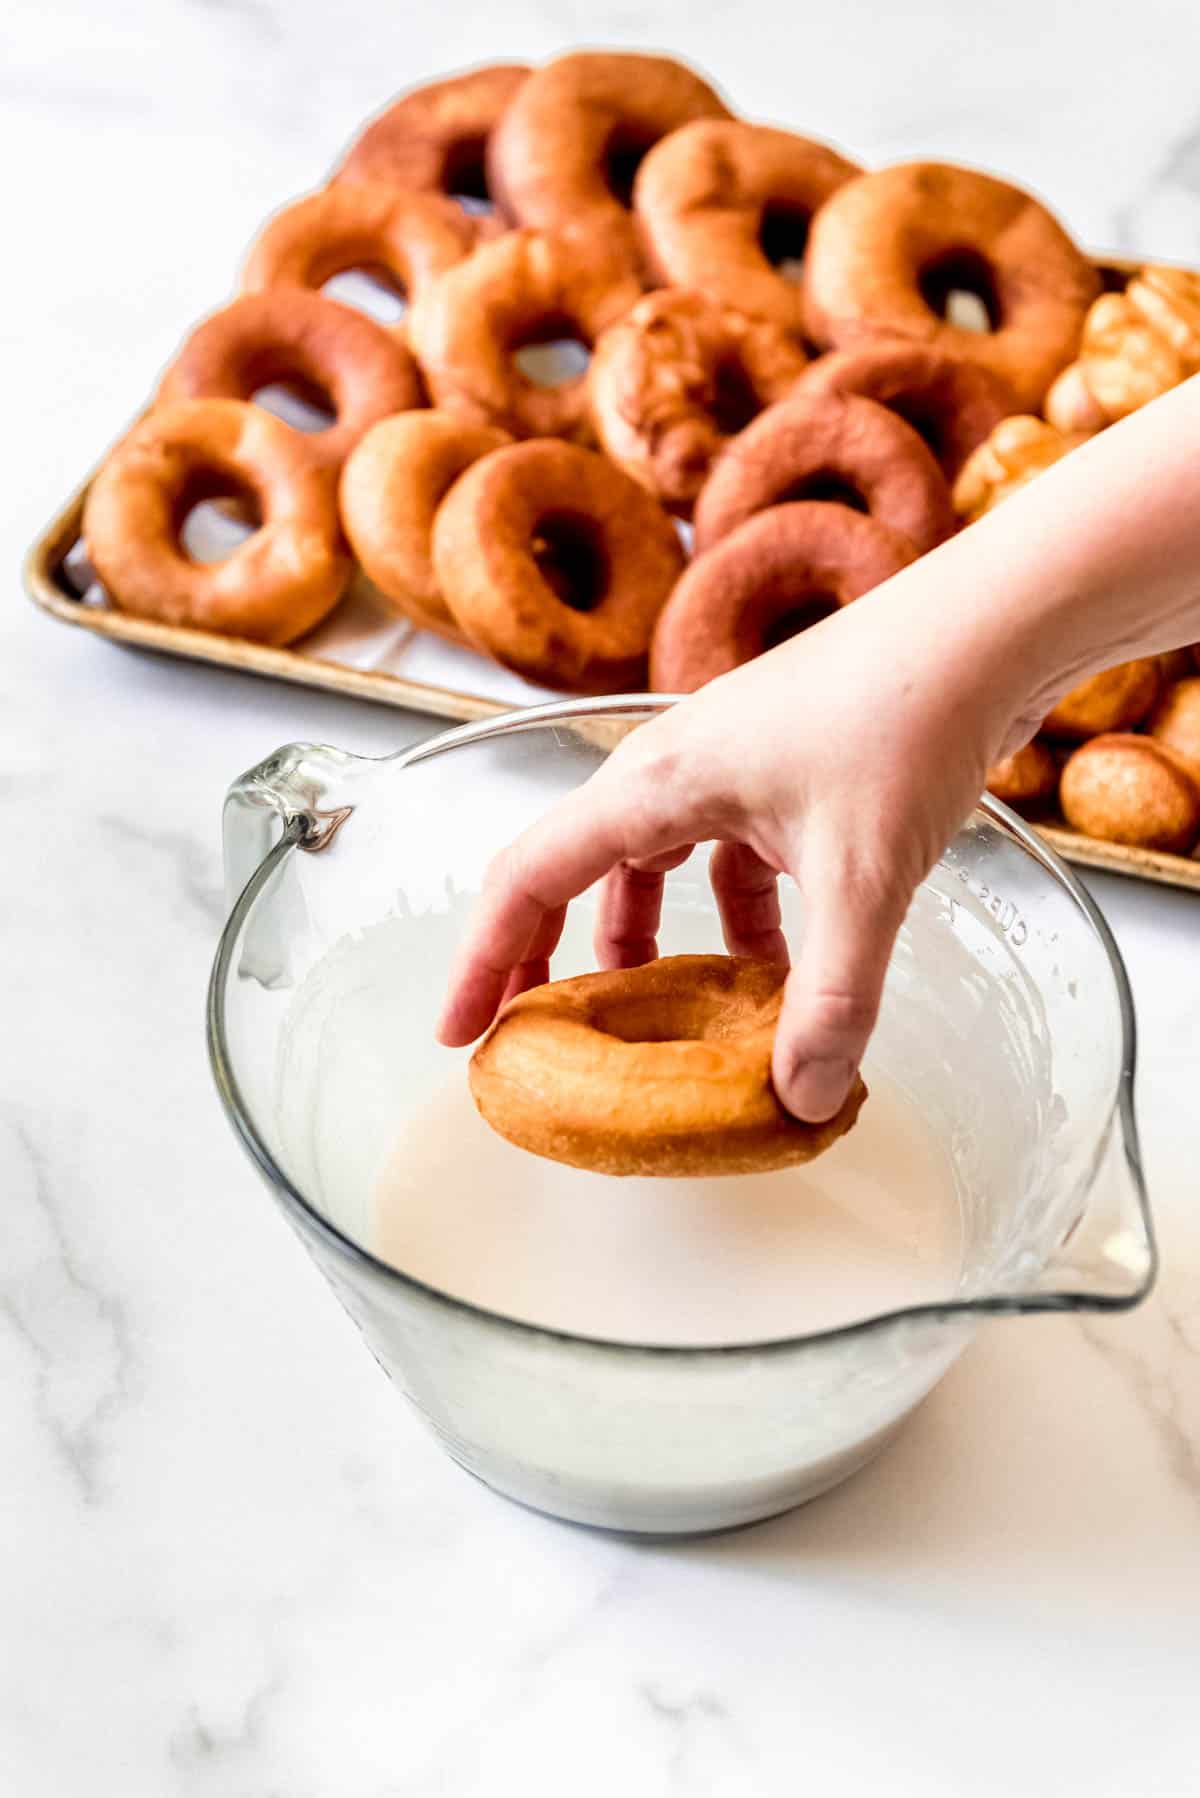 Dipping a freshly fried donut into donut glaze.